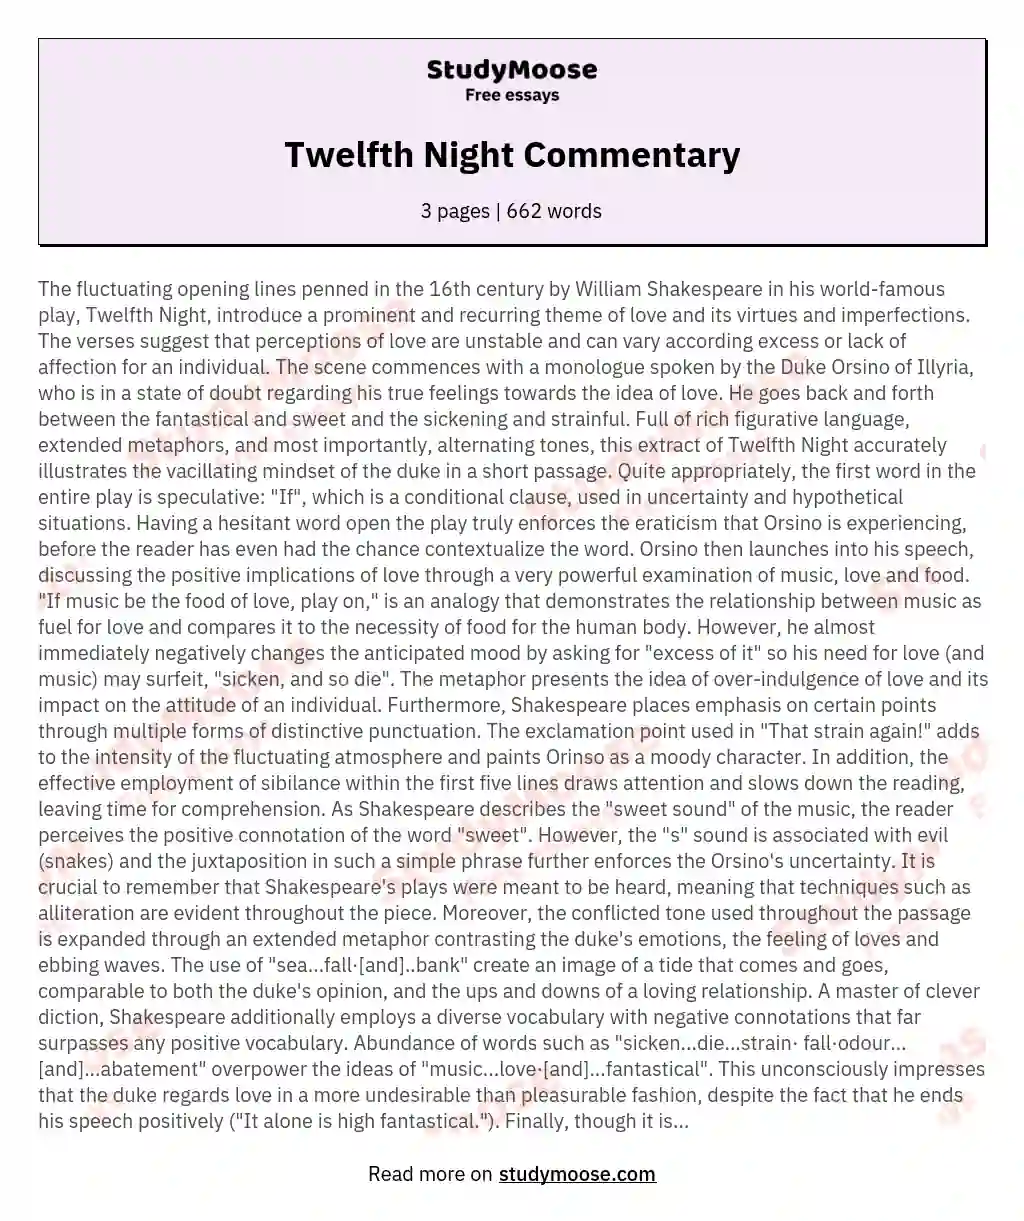 Twelfth Night Commentary essay